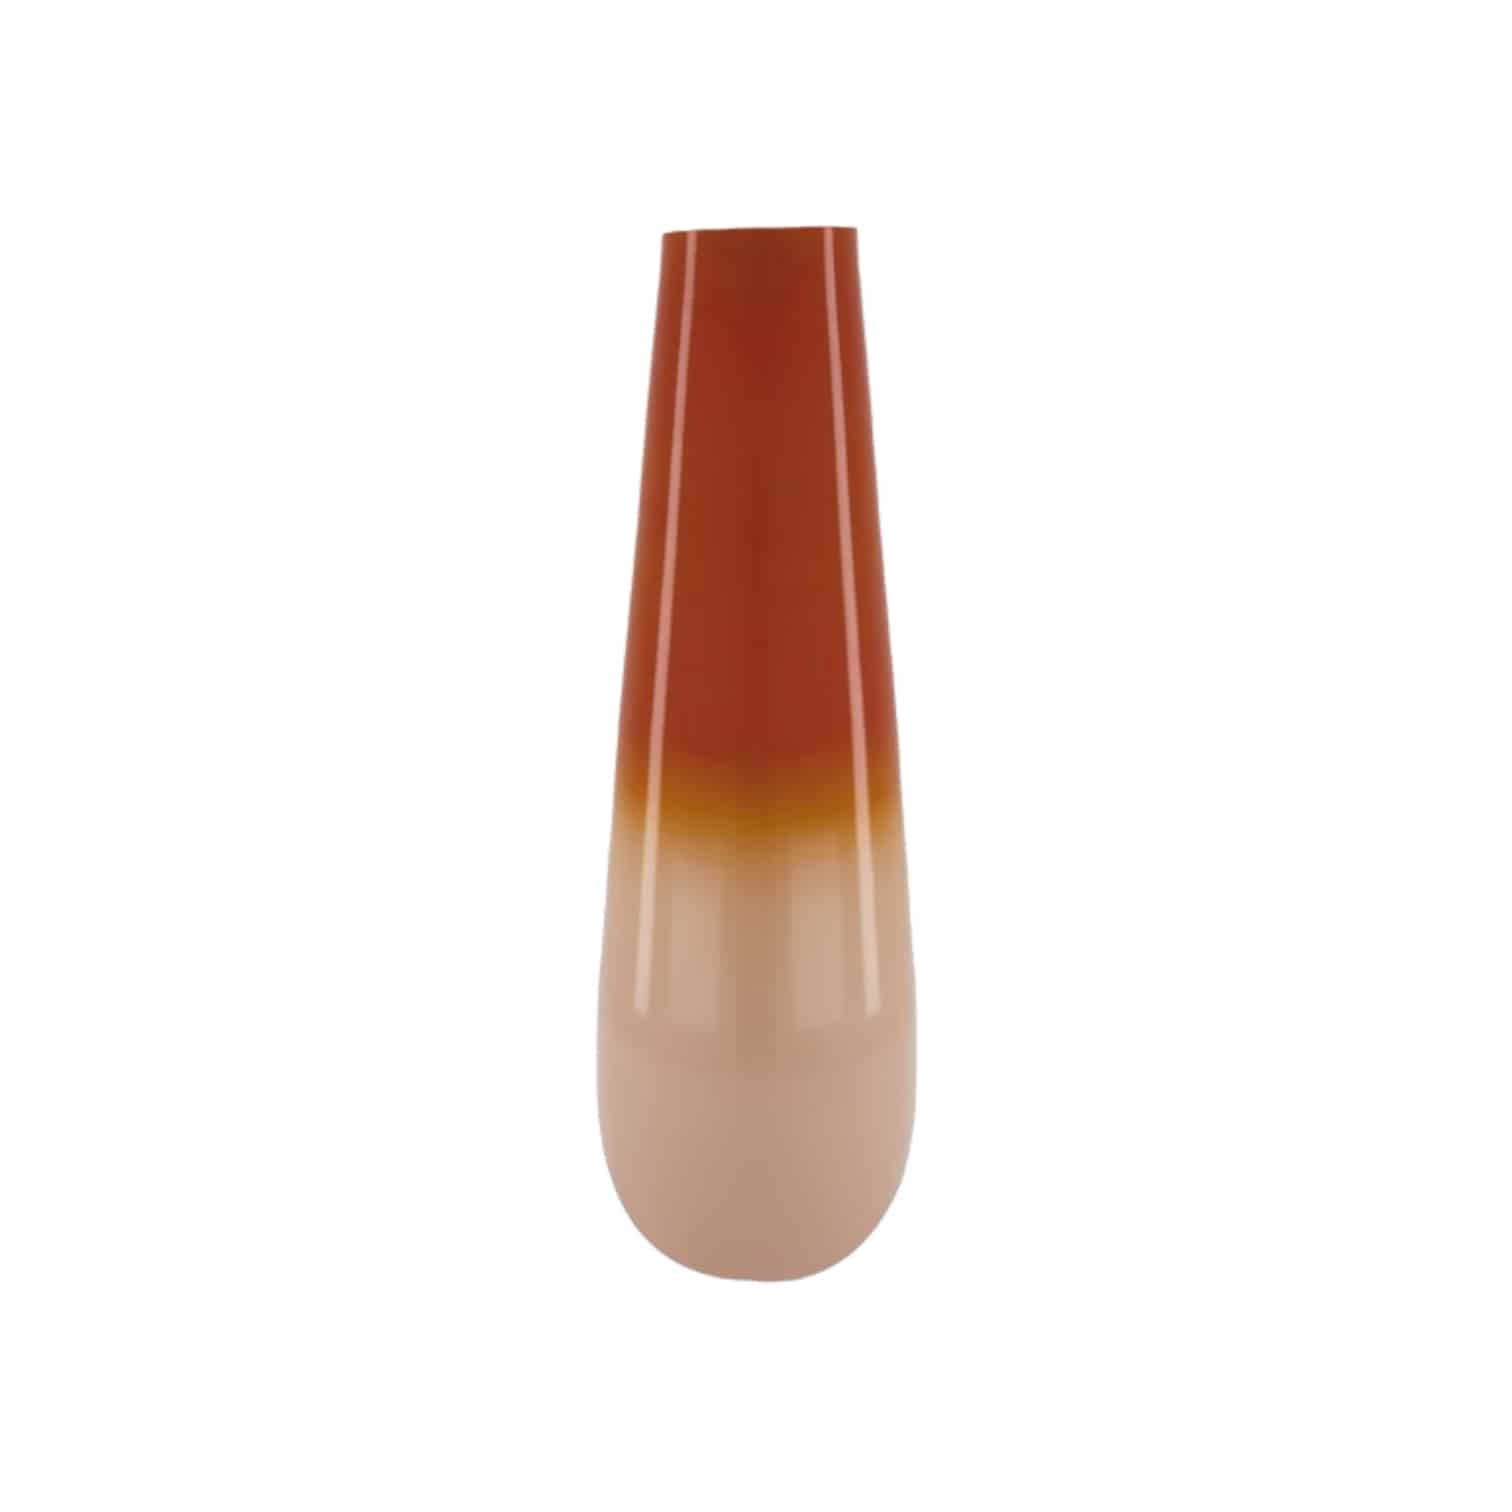 Vase orange/beige